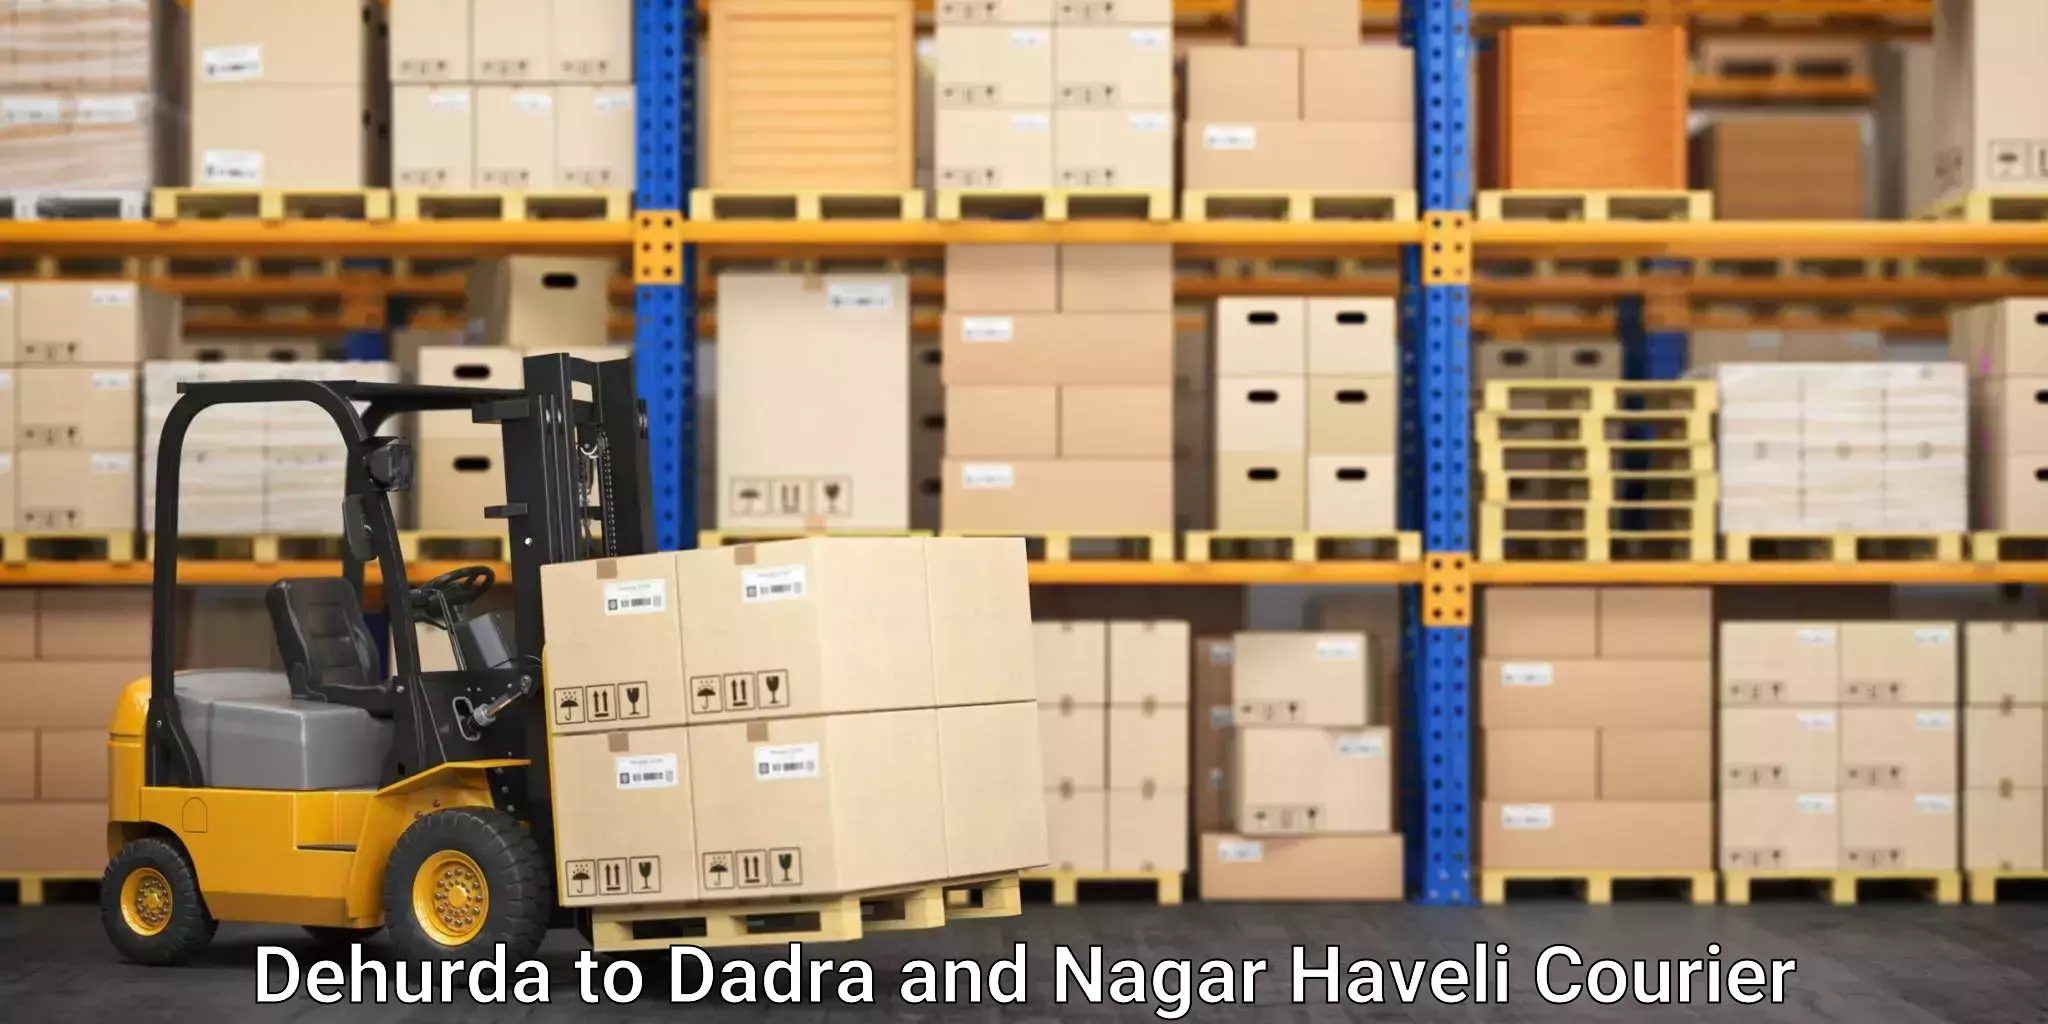 Affordable parcel rates in Dehurda to Dadra and Nagar Haveli